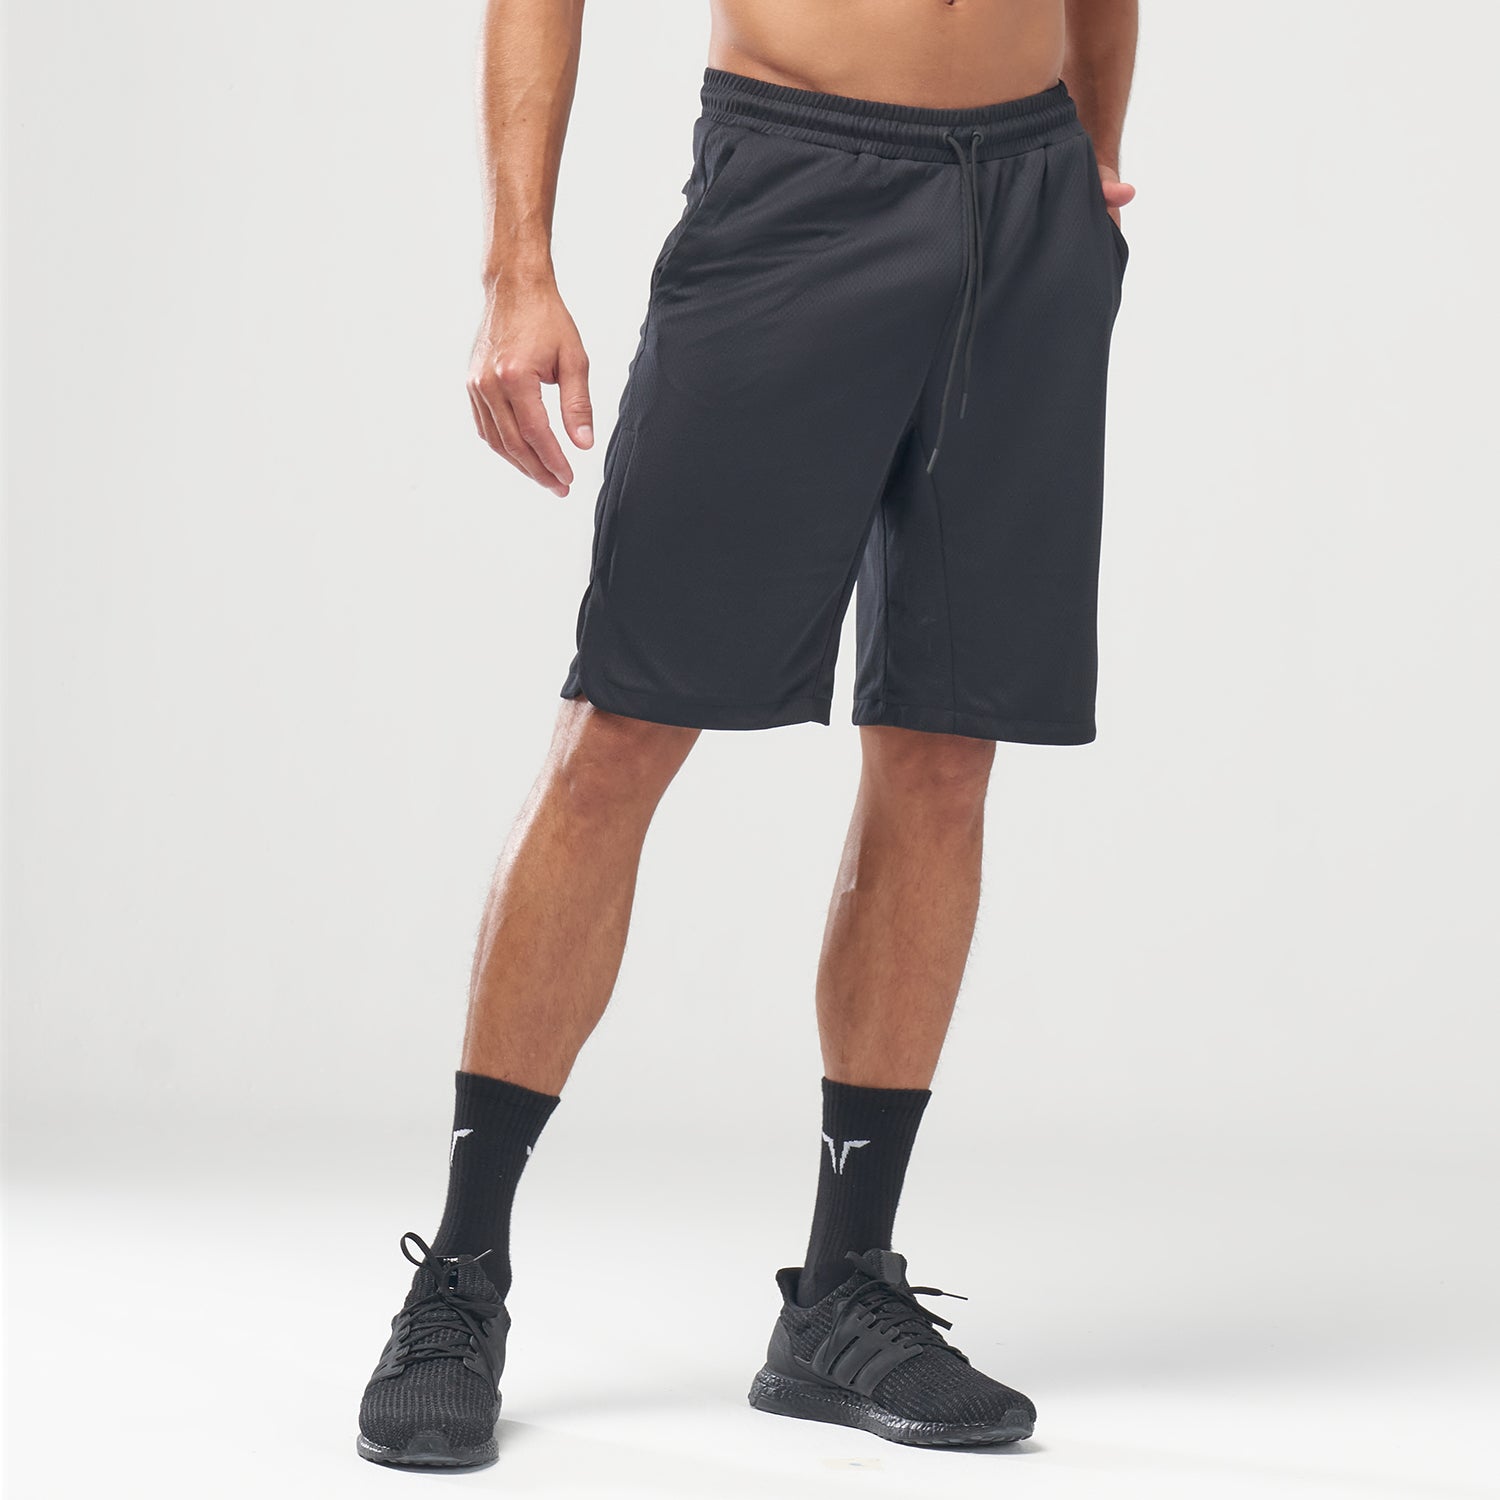 squatwolf-gym-wear-code-basketball-shorts-black-workout-short-for-men